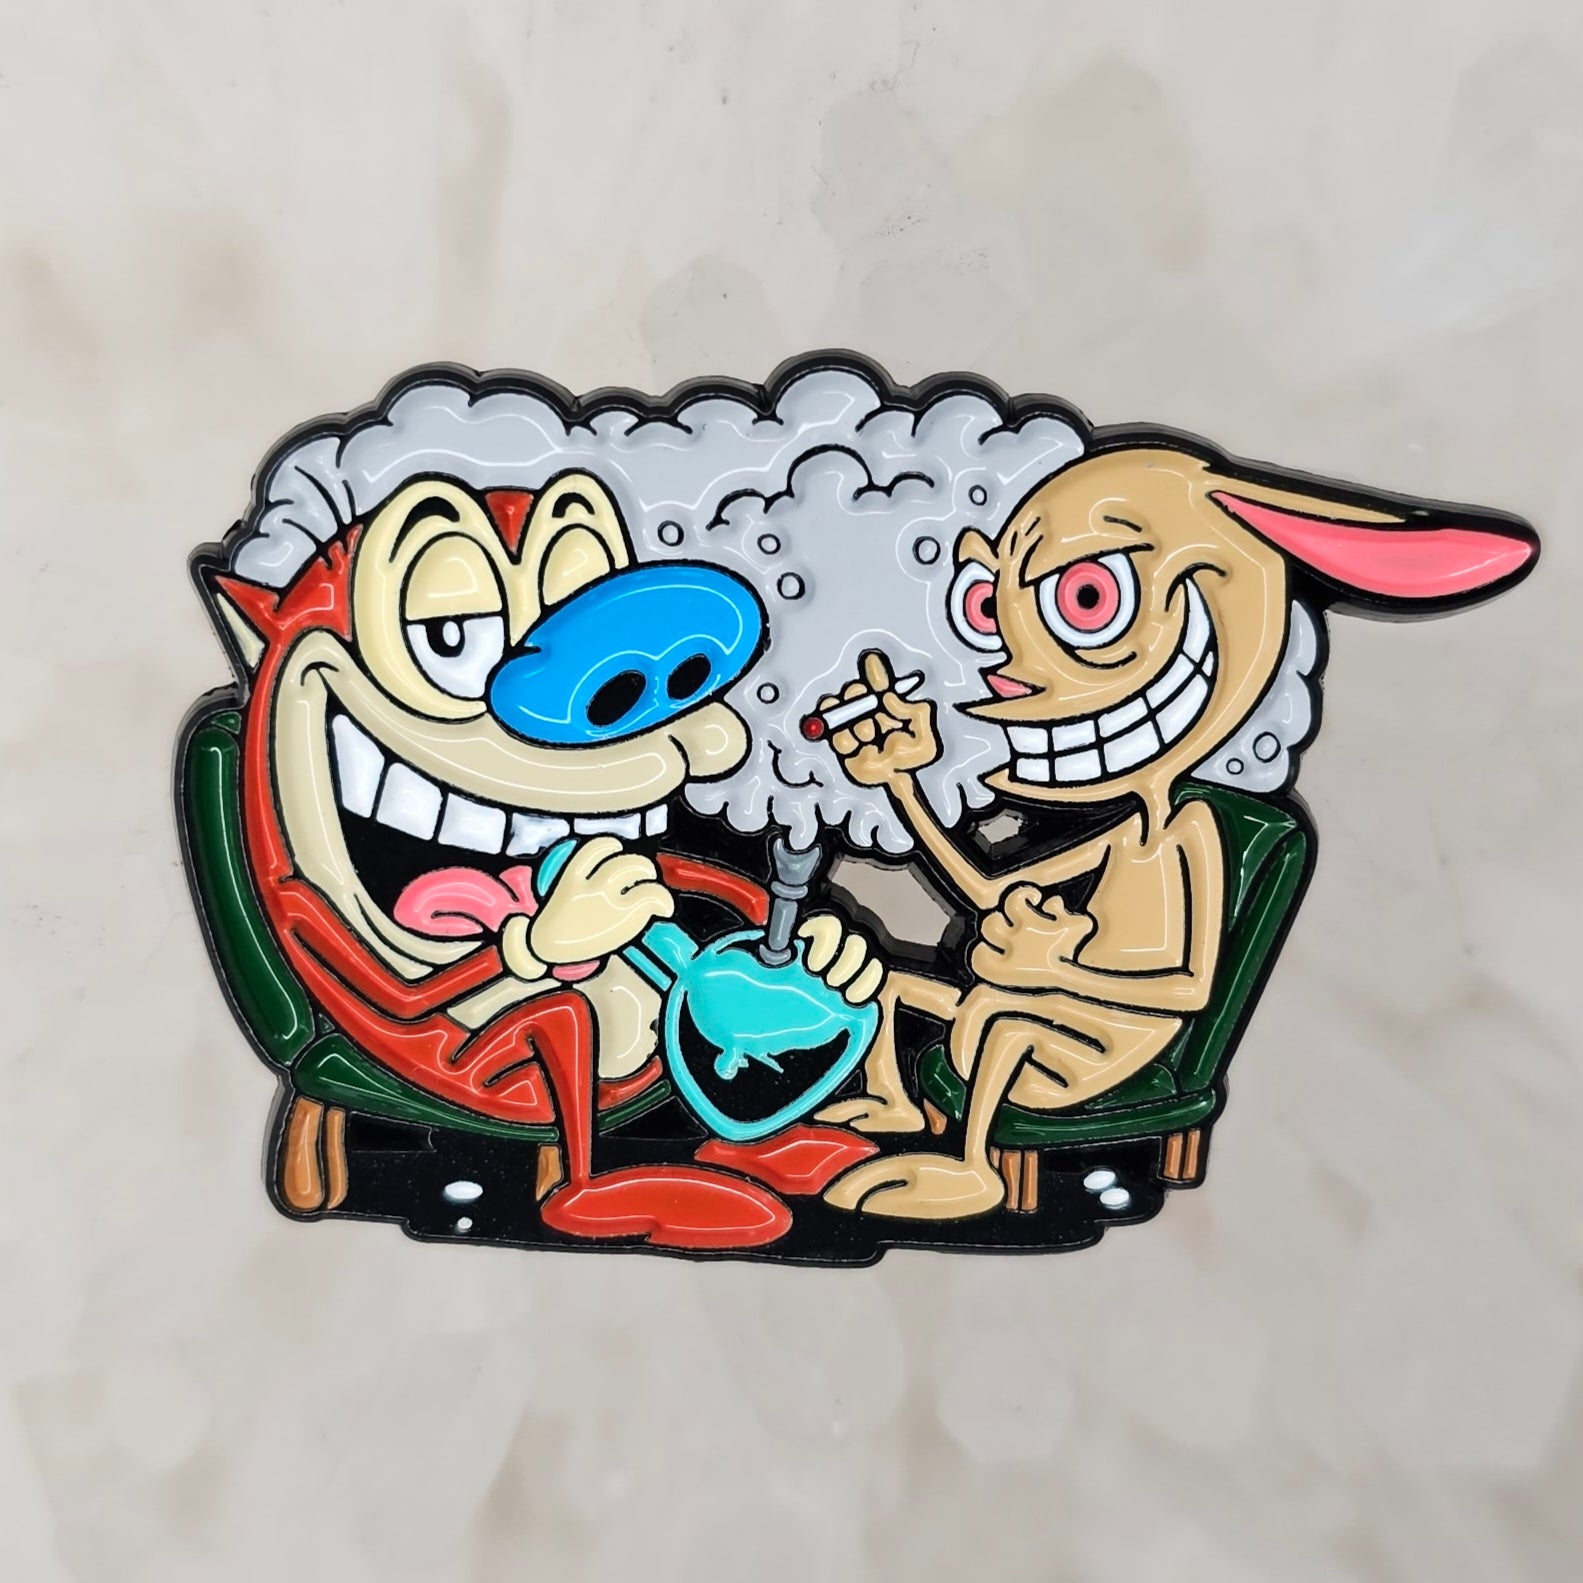 Stoner Stimpy &amp; Hippy Ren 90s Cartoon Weed Parody Enamel Pins Hat Pins Lapel Pin Brooch Badge Festival Pin